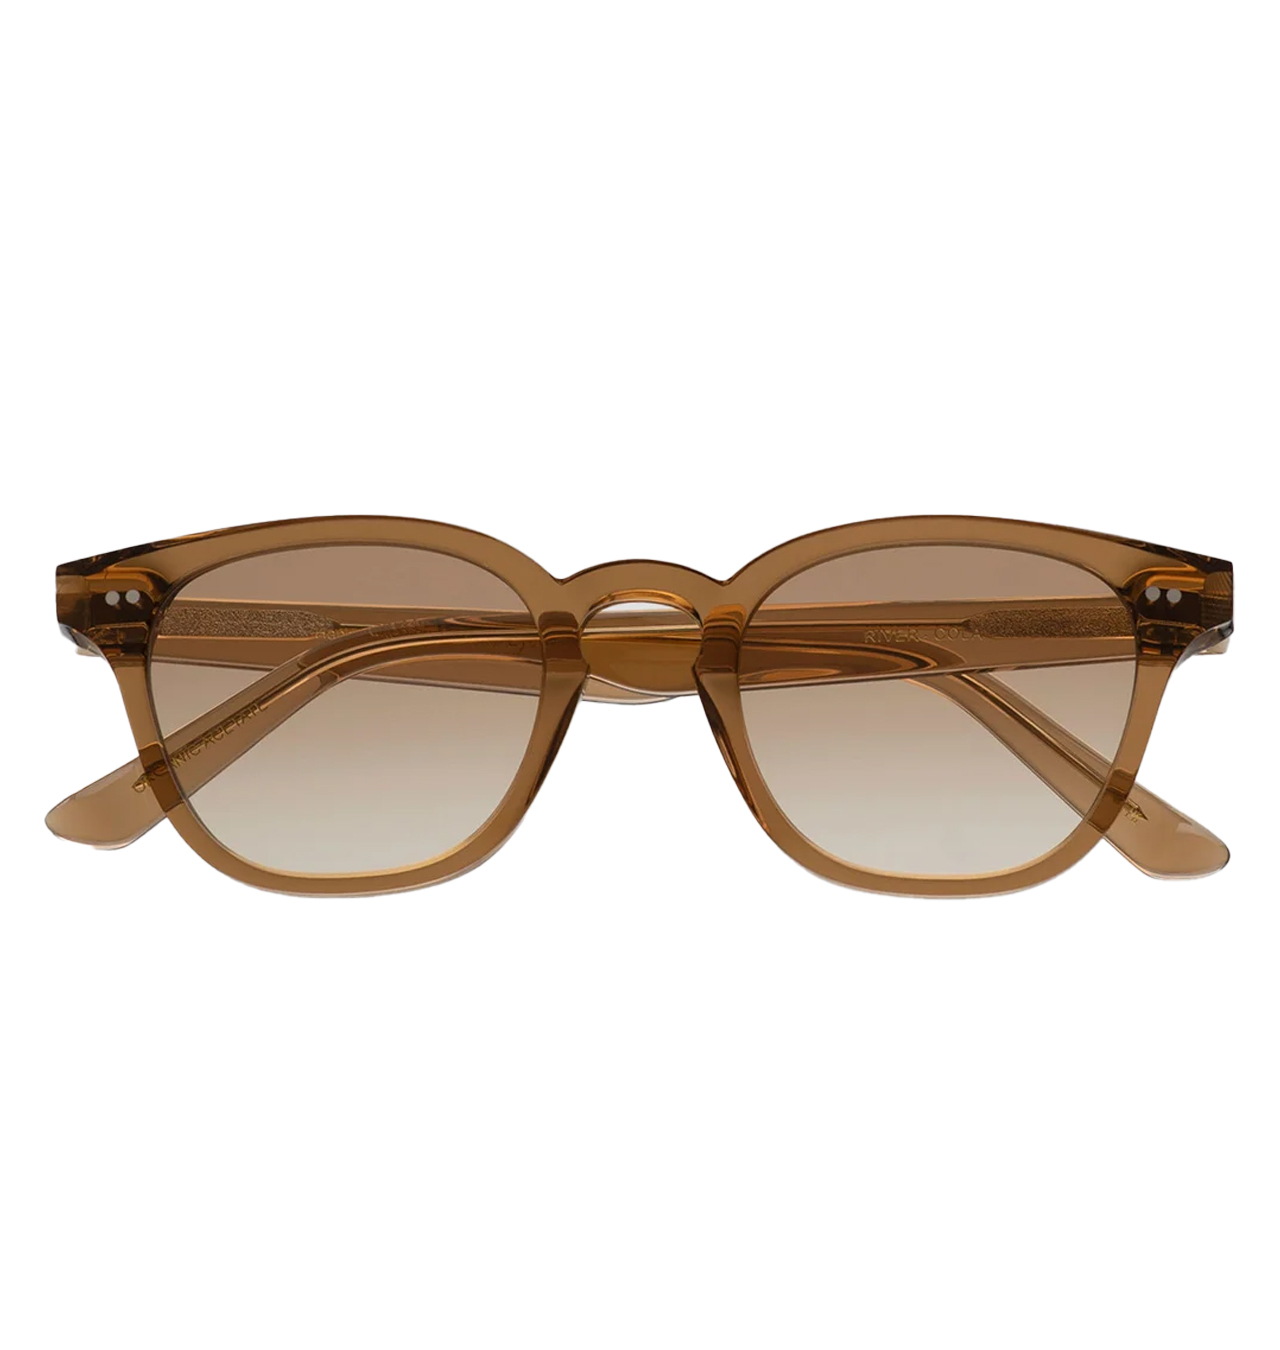 Monokel Eyewear - River Cola Sunglasses - Brown Gradient Lens